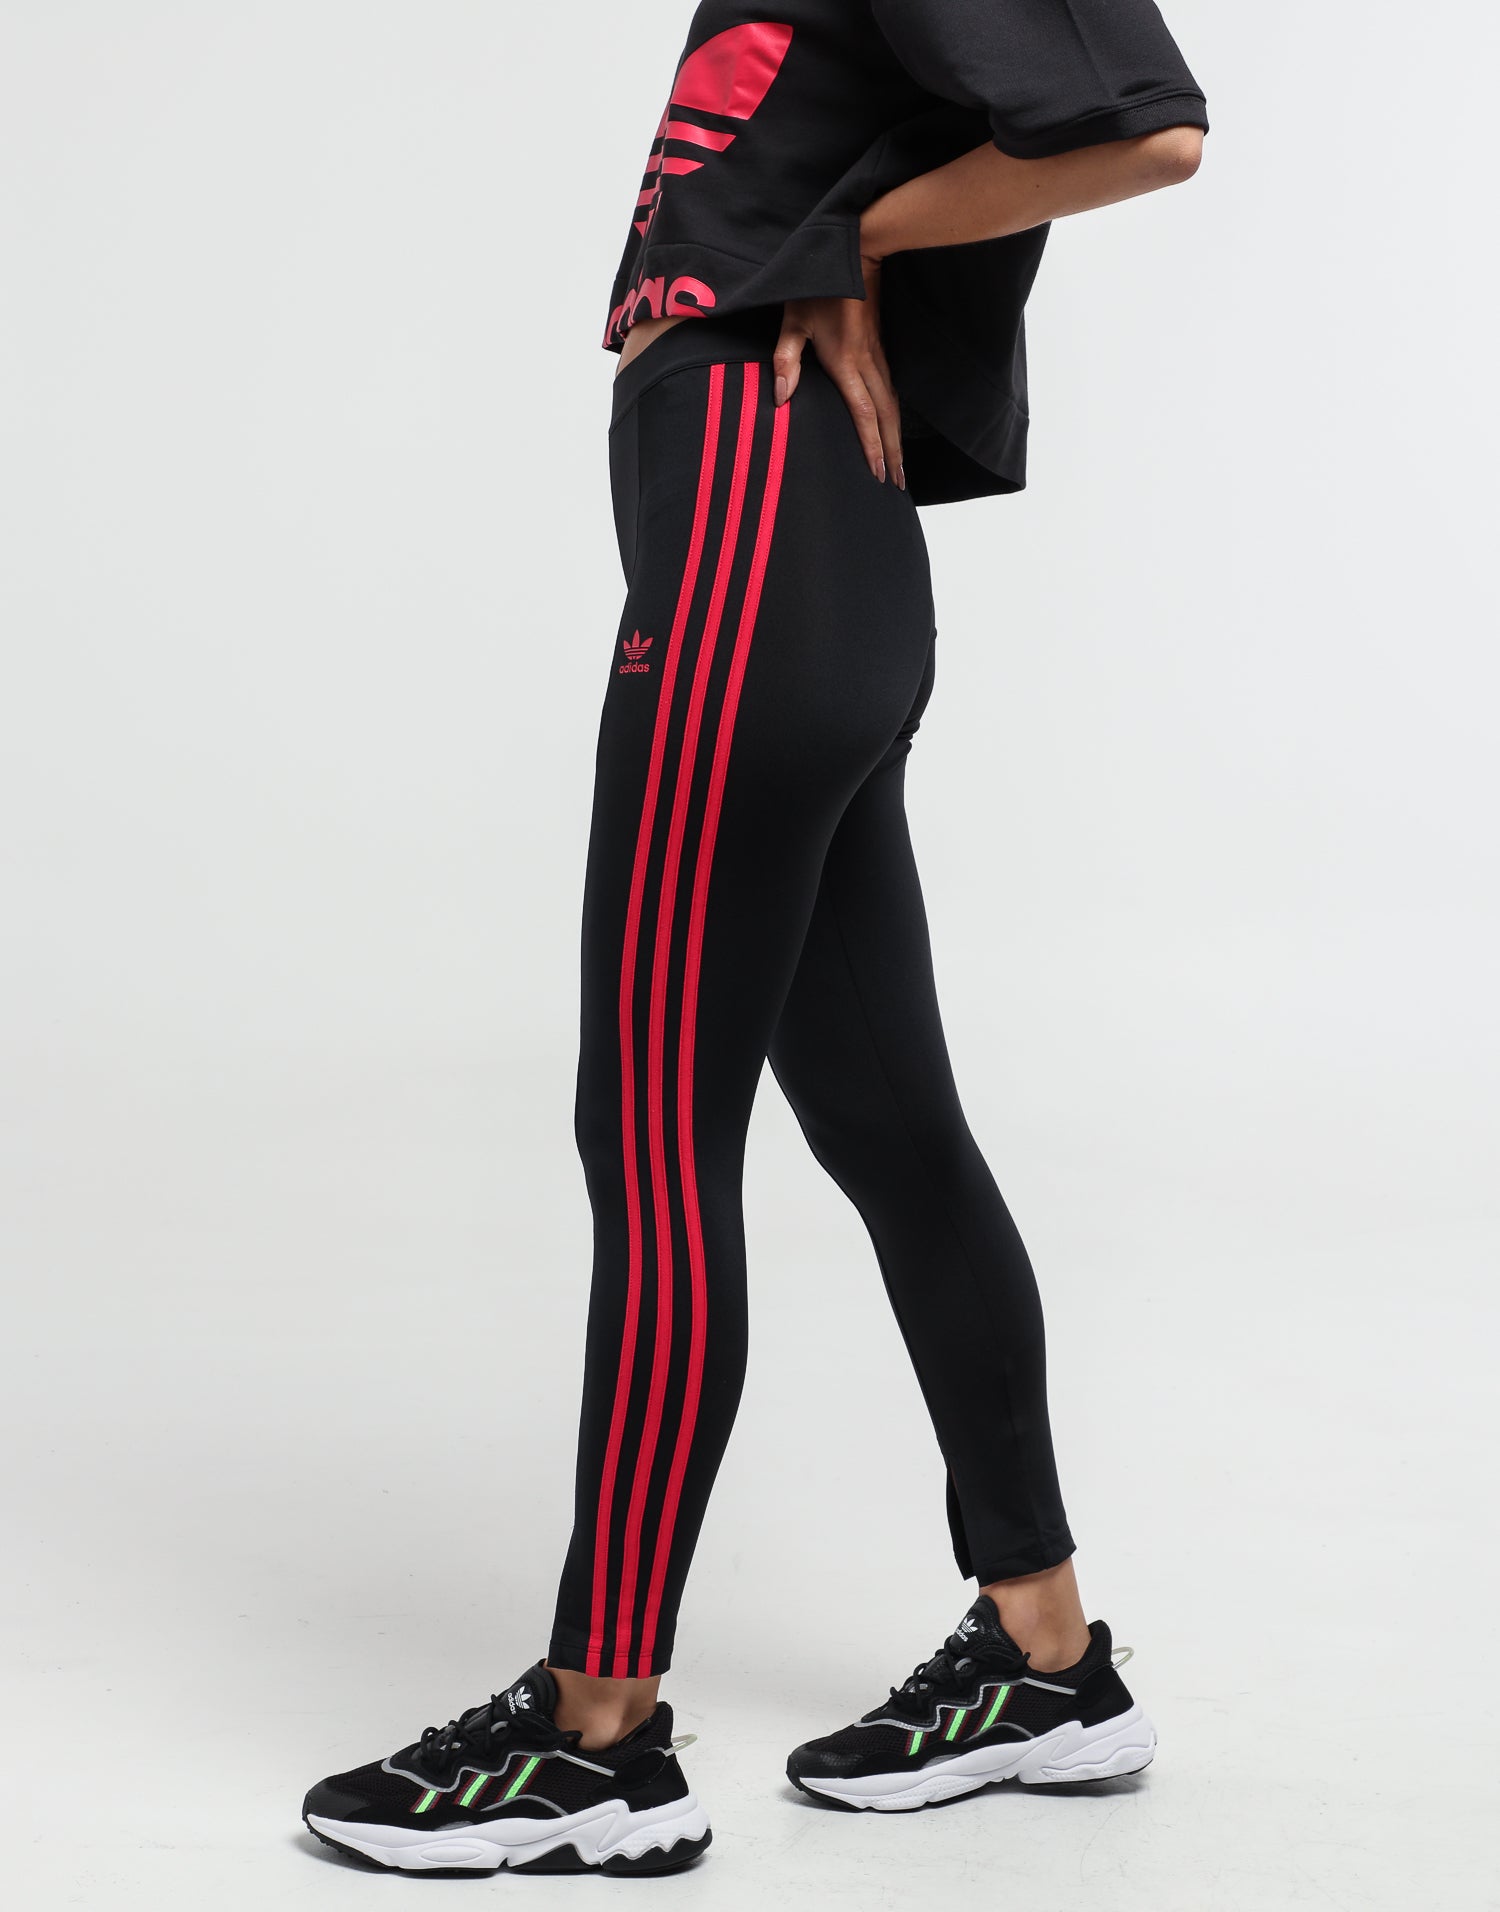 black and red adidas leggings